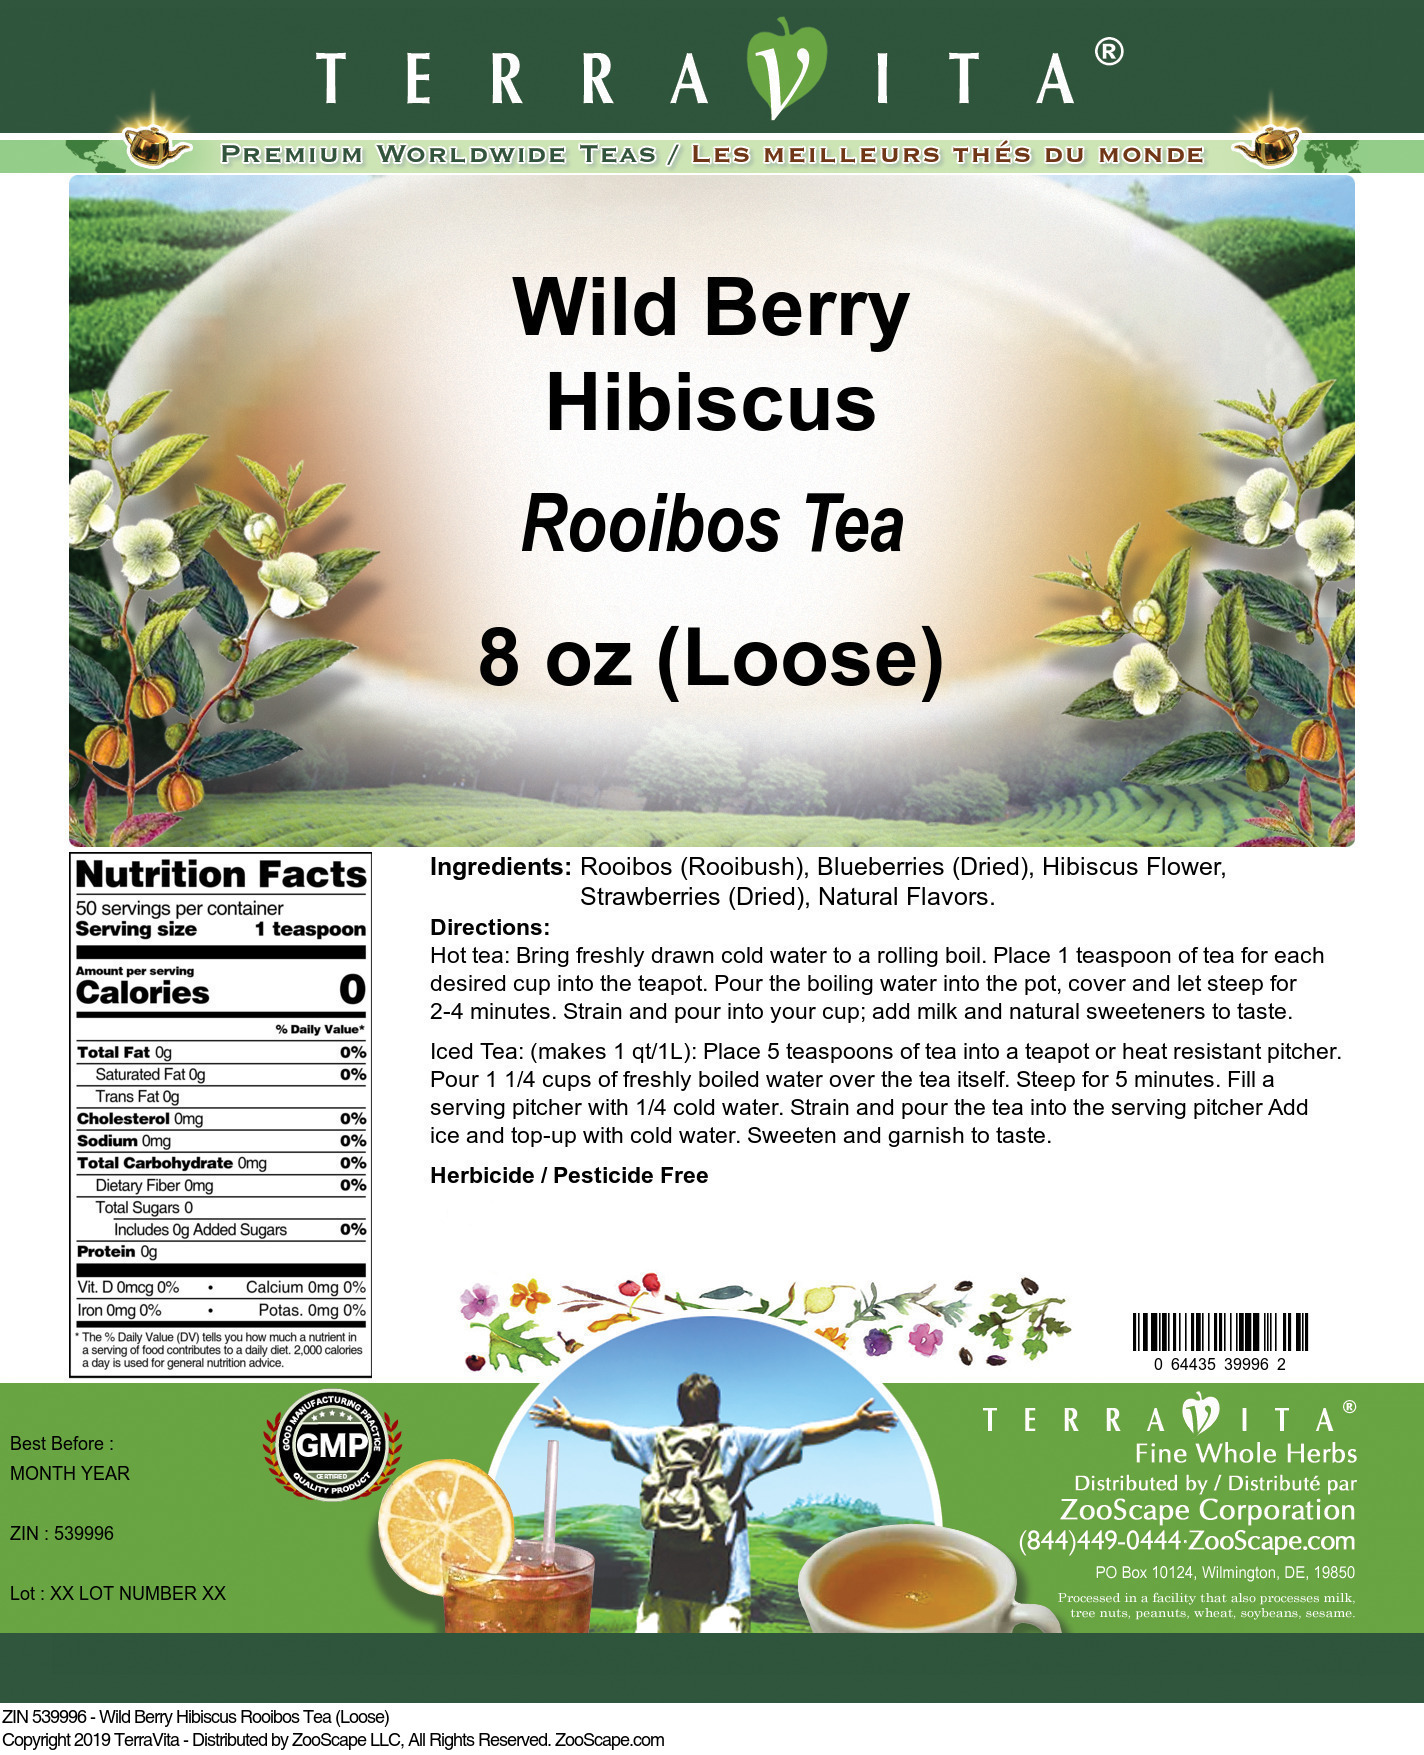 Wild Berry Hibiscus Rooibos Tea (Loose) - Label